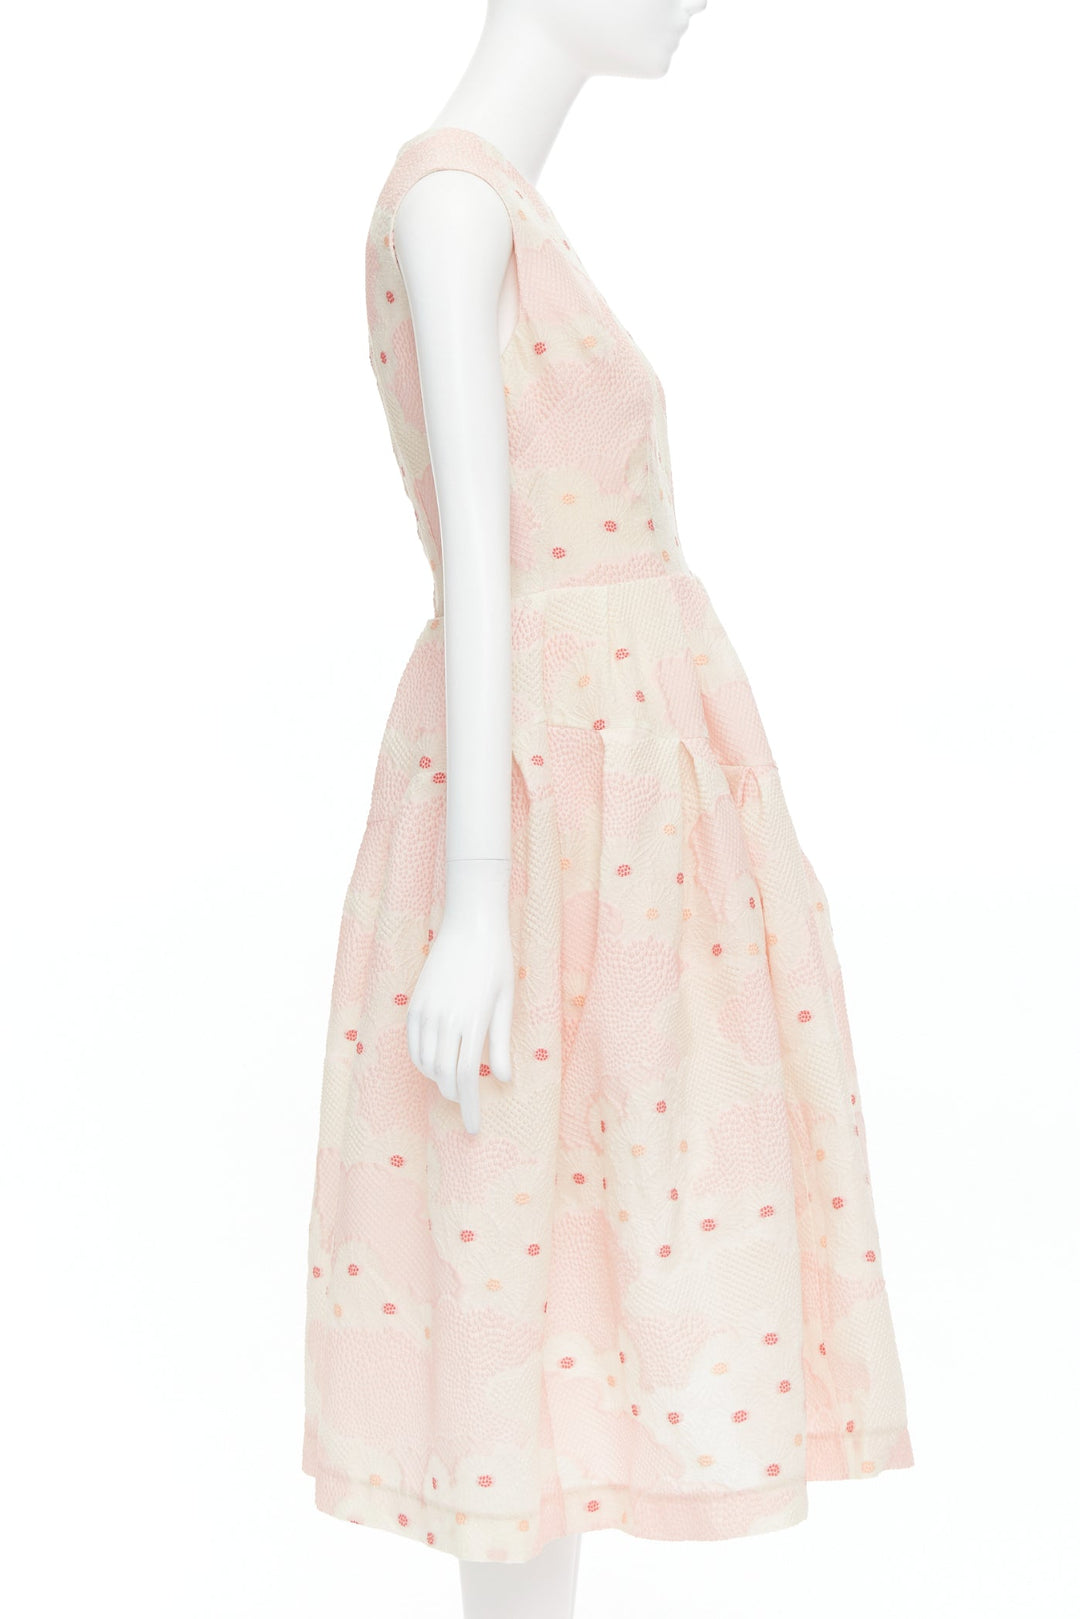 SIMONE ROCHA Kimono pink silk cotton blend floral cloque midi dress UK10 M